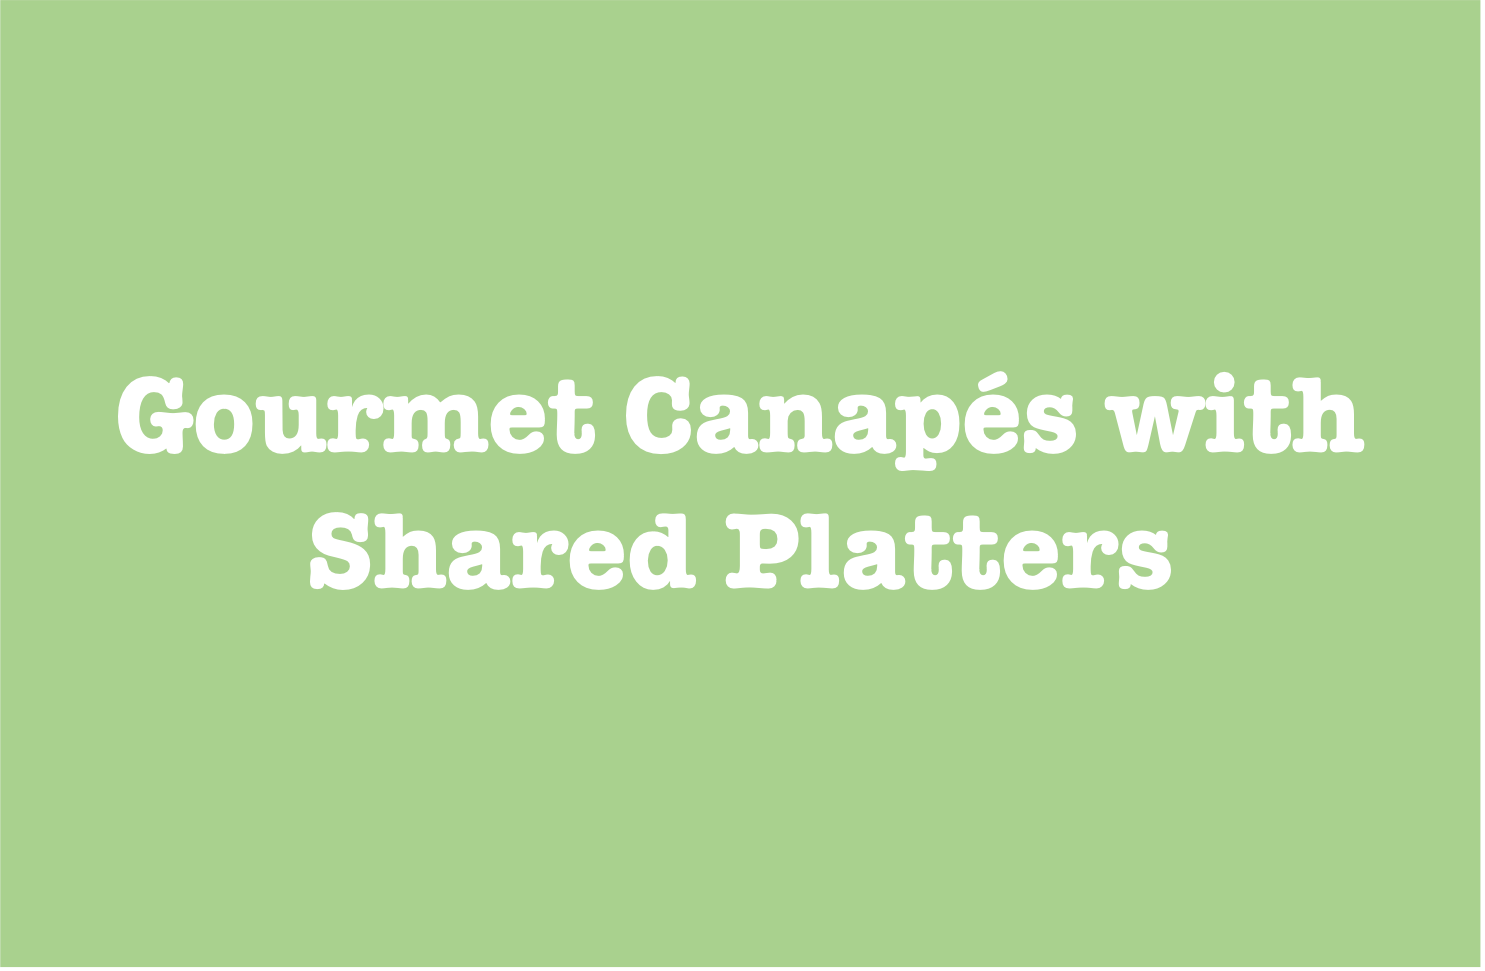 Gourmet Canapé and Shared Platter Menu - Central Coast